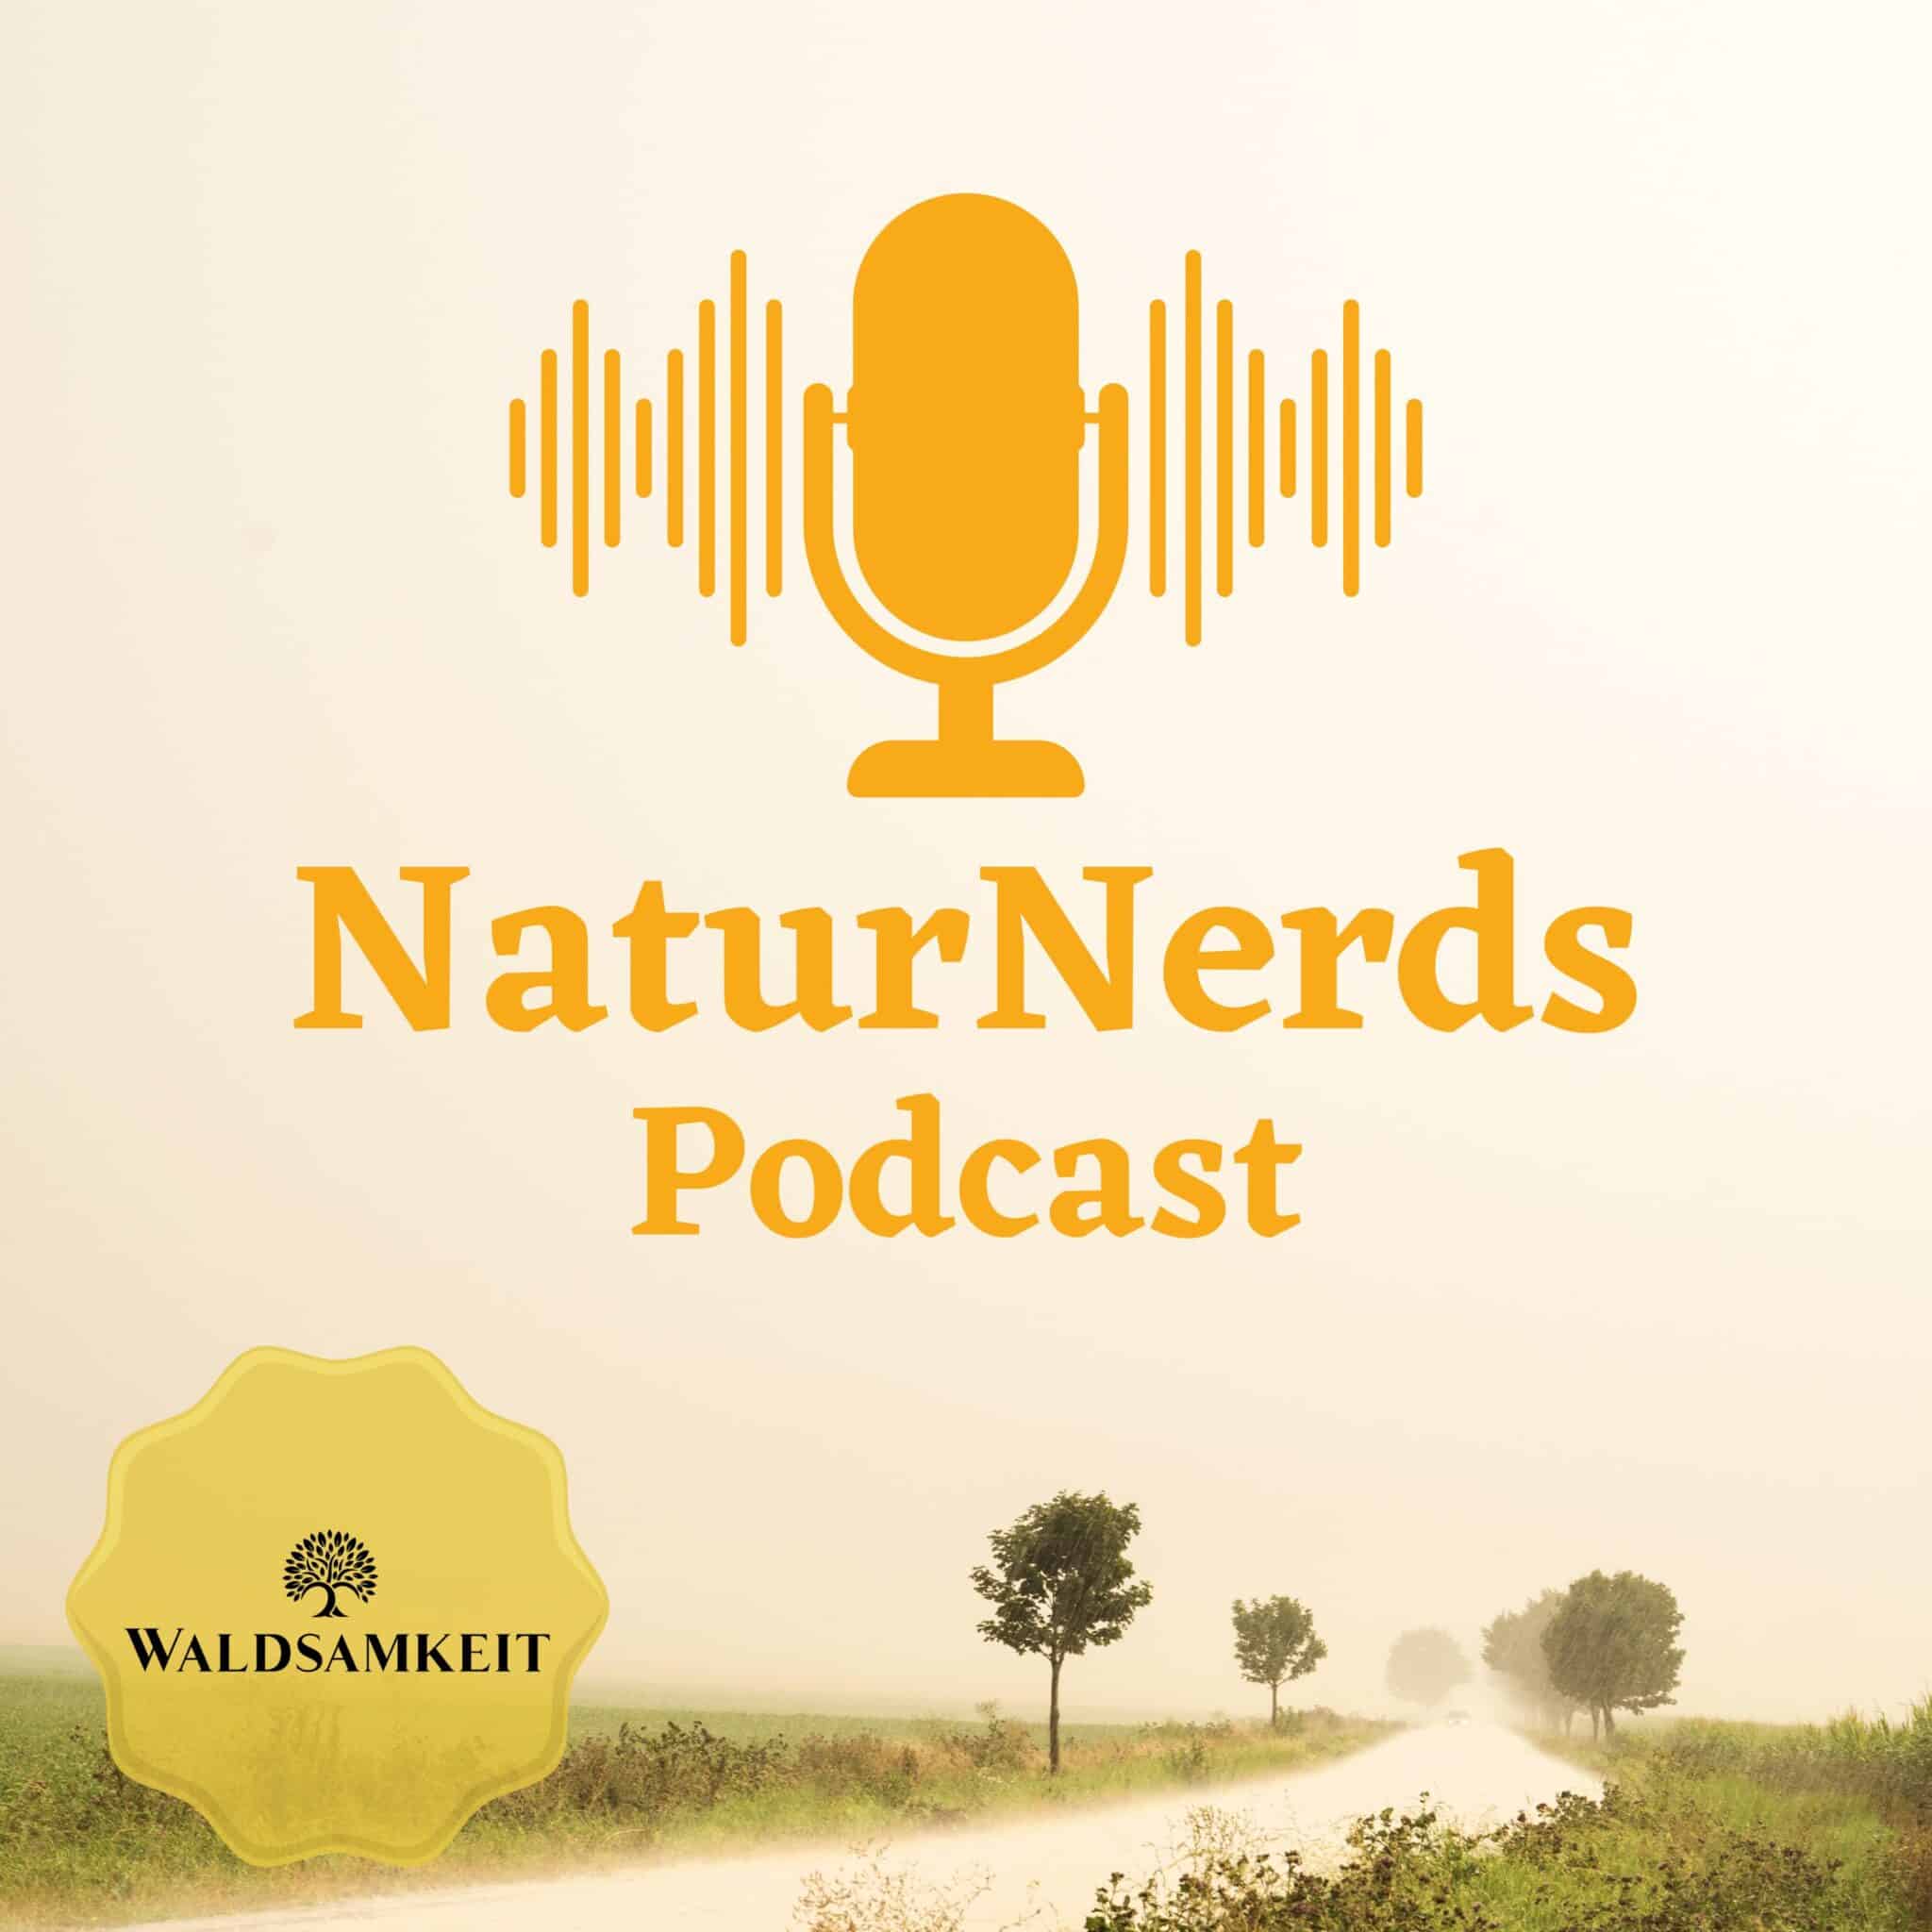 naturnerds podcast